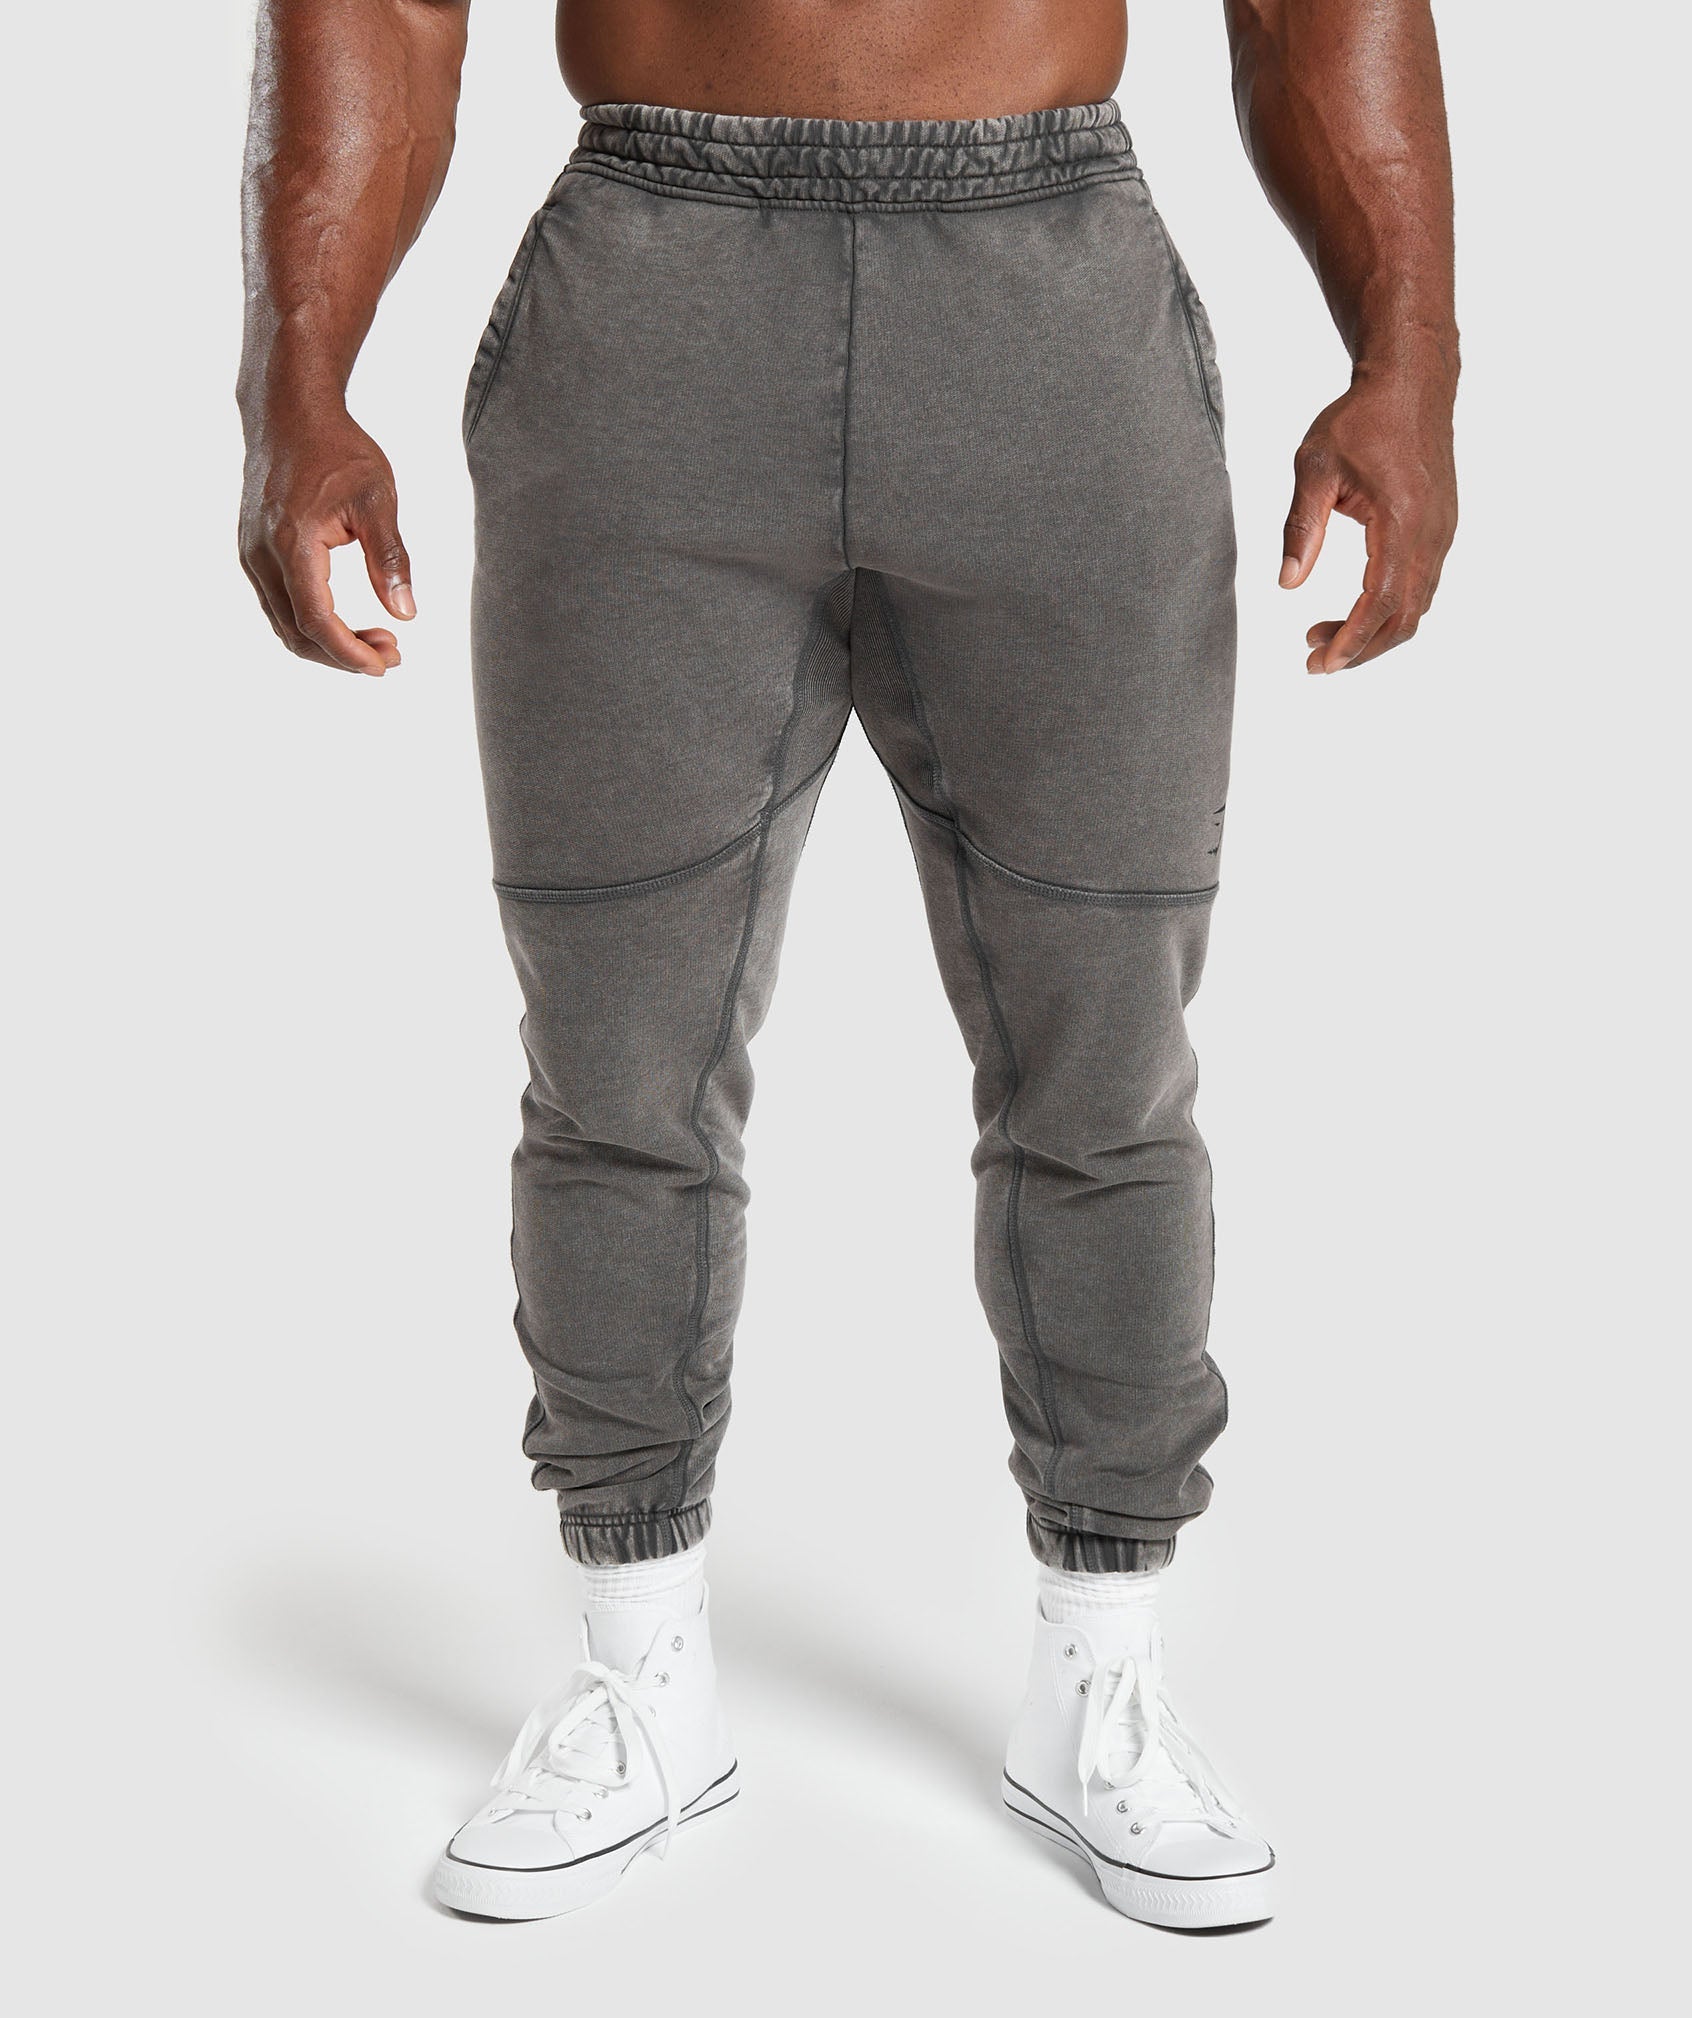 Gymshark sweatpants gray joggers - Gem